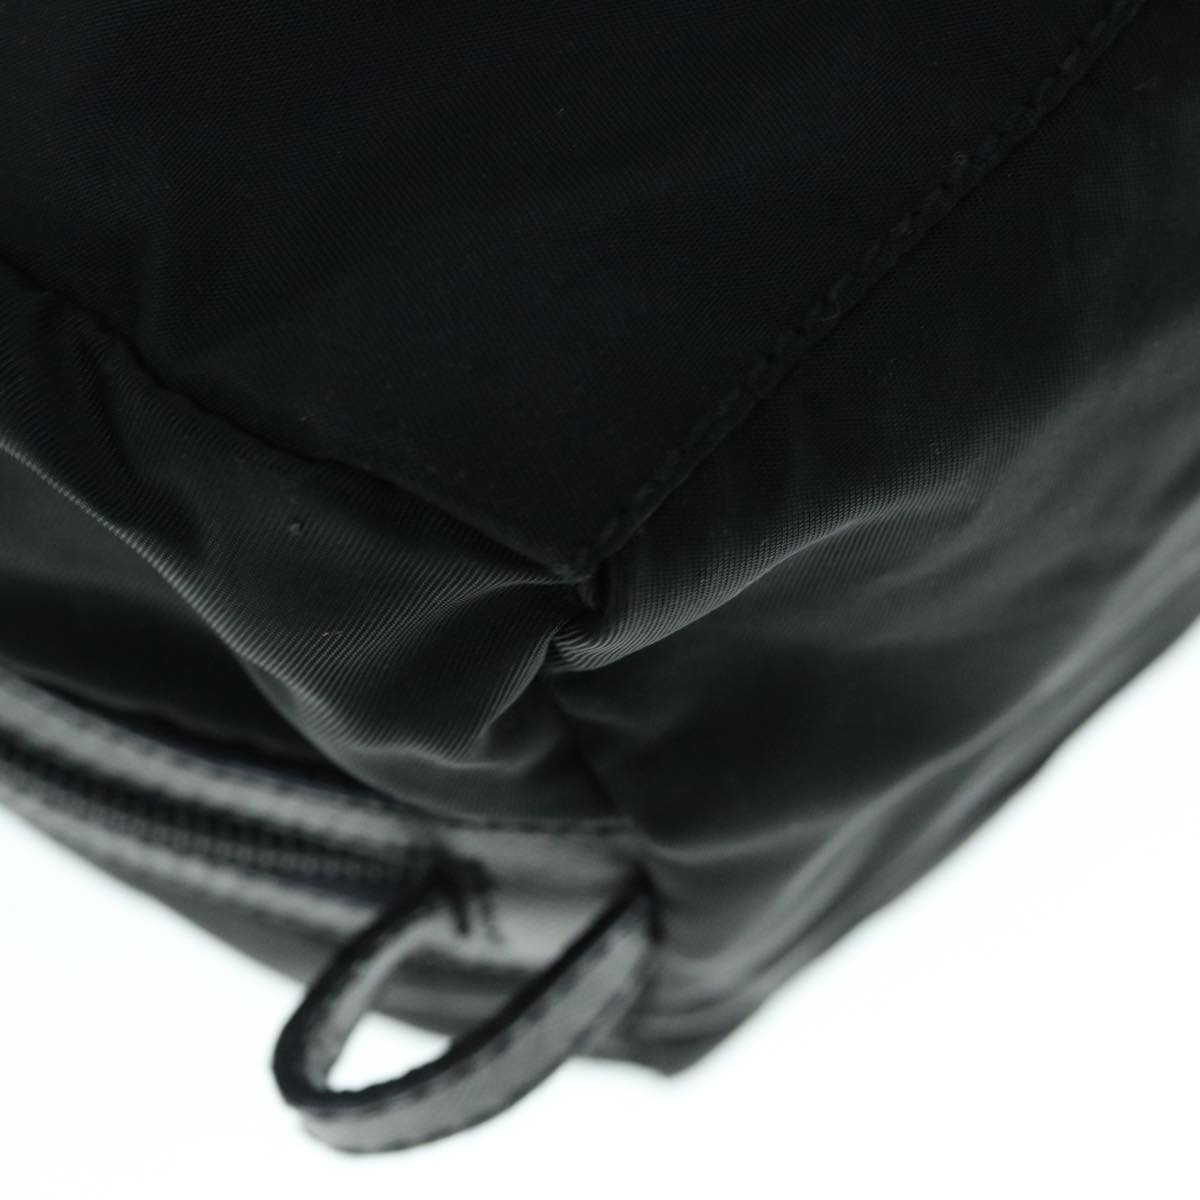 PRADA Clutch Bag Nylon Black Auth am5577